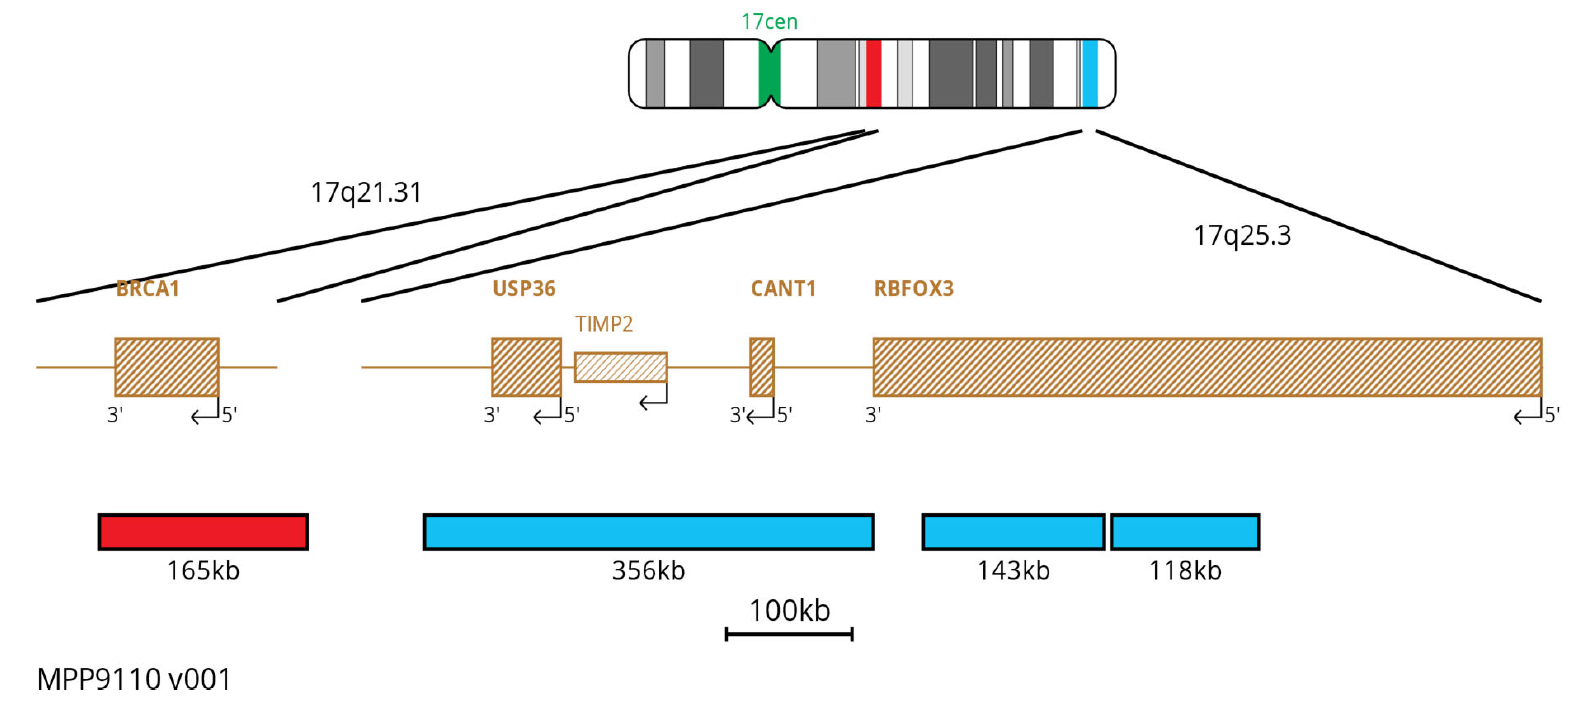 MPP9110 BRCA1 17C 17Q25.3 Deletion FISH Probe Chromosome Map